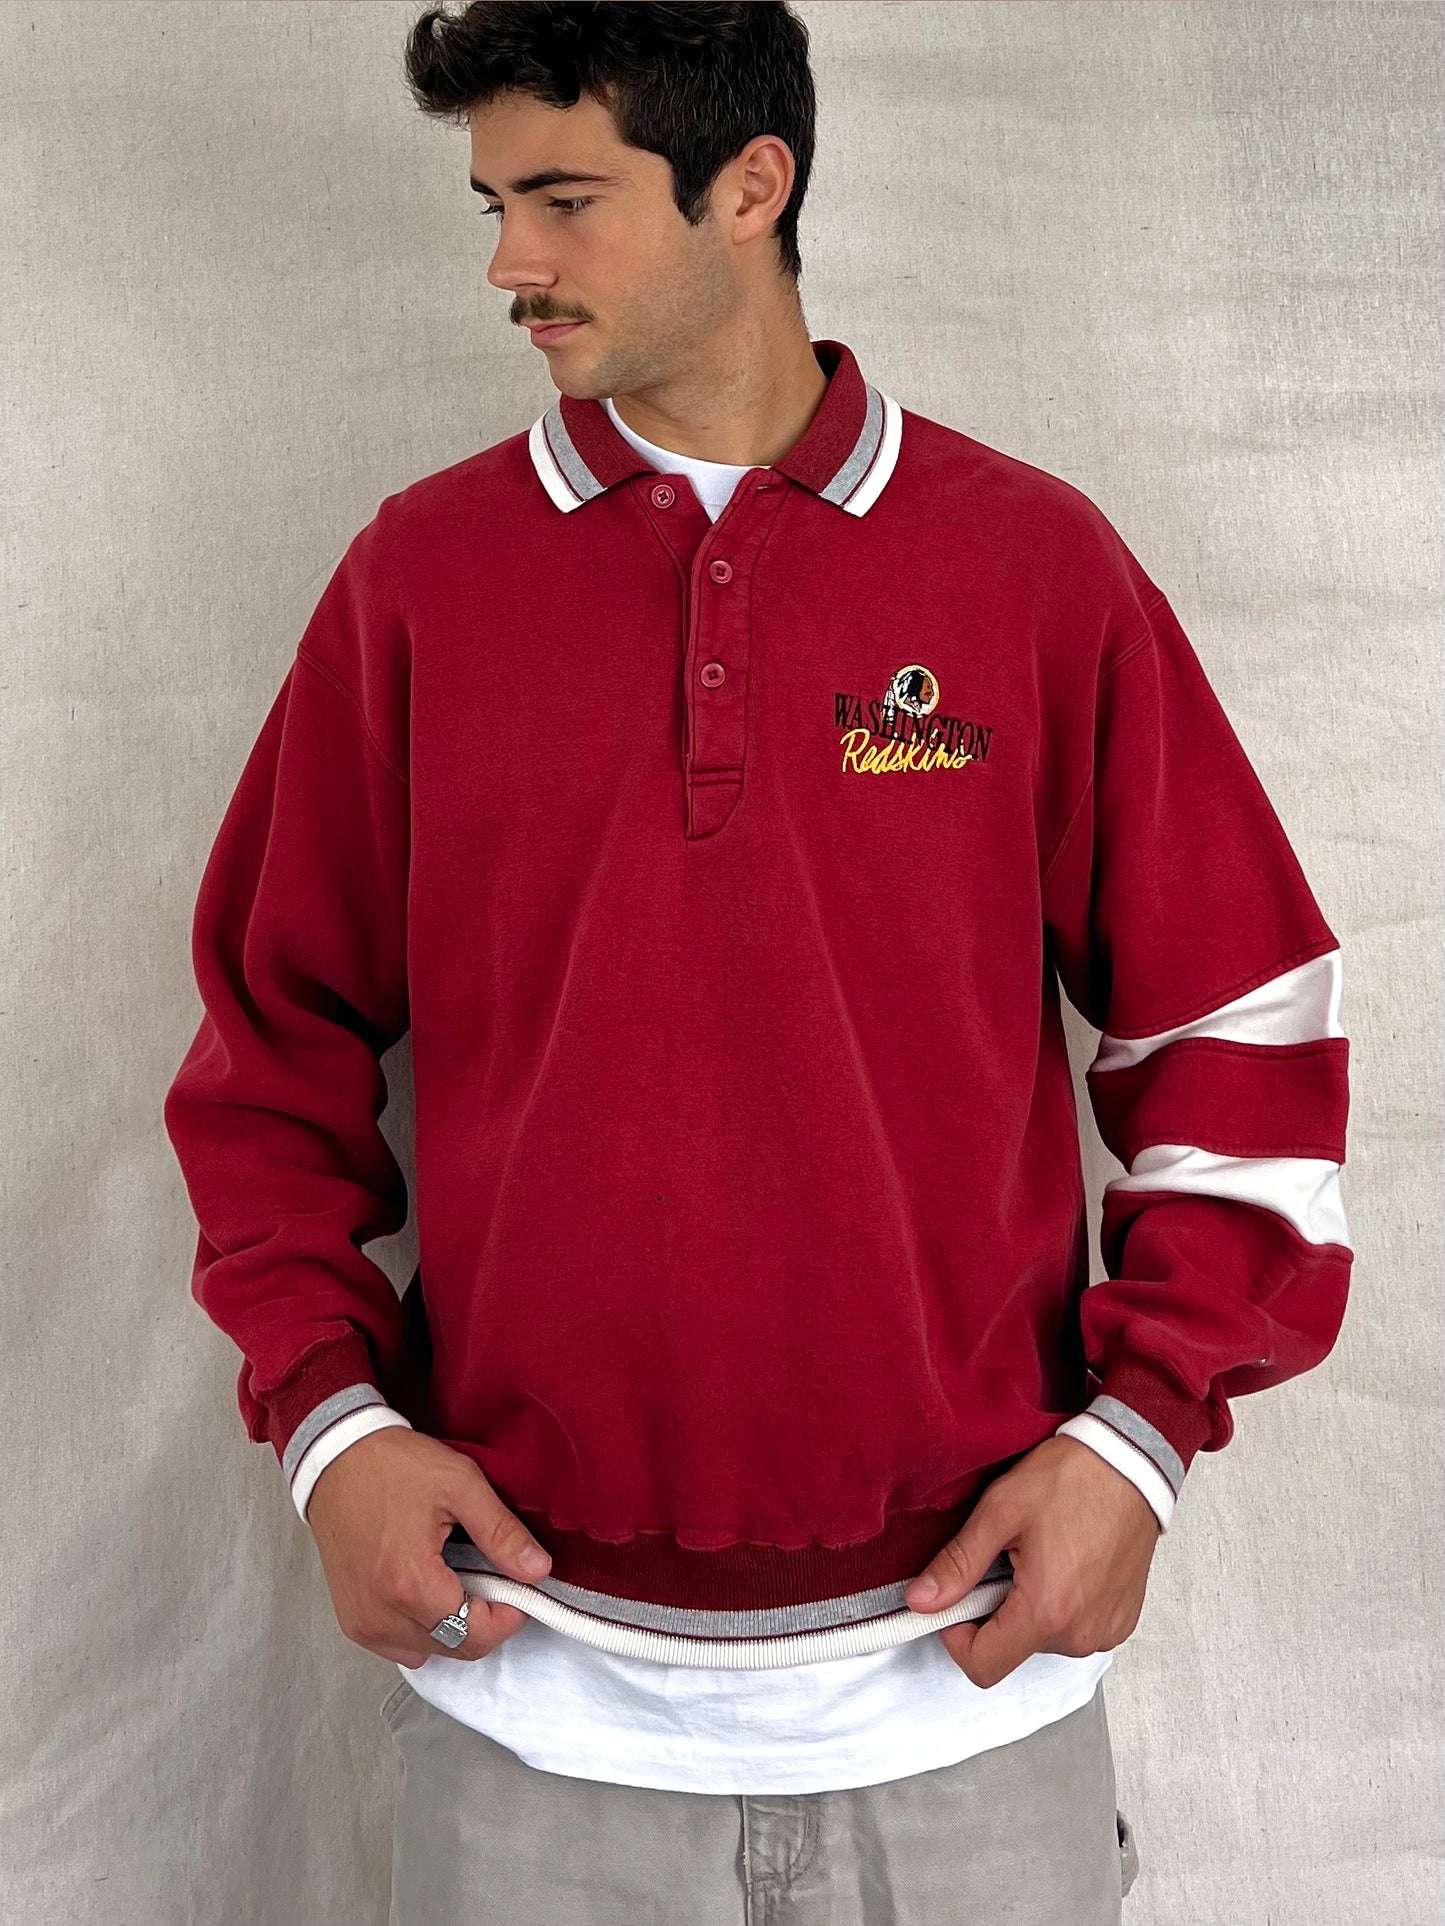 90's Washington Redskins NFL Embroidered Vintage Collared Sweatshirt Size M